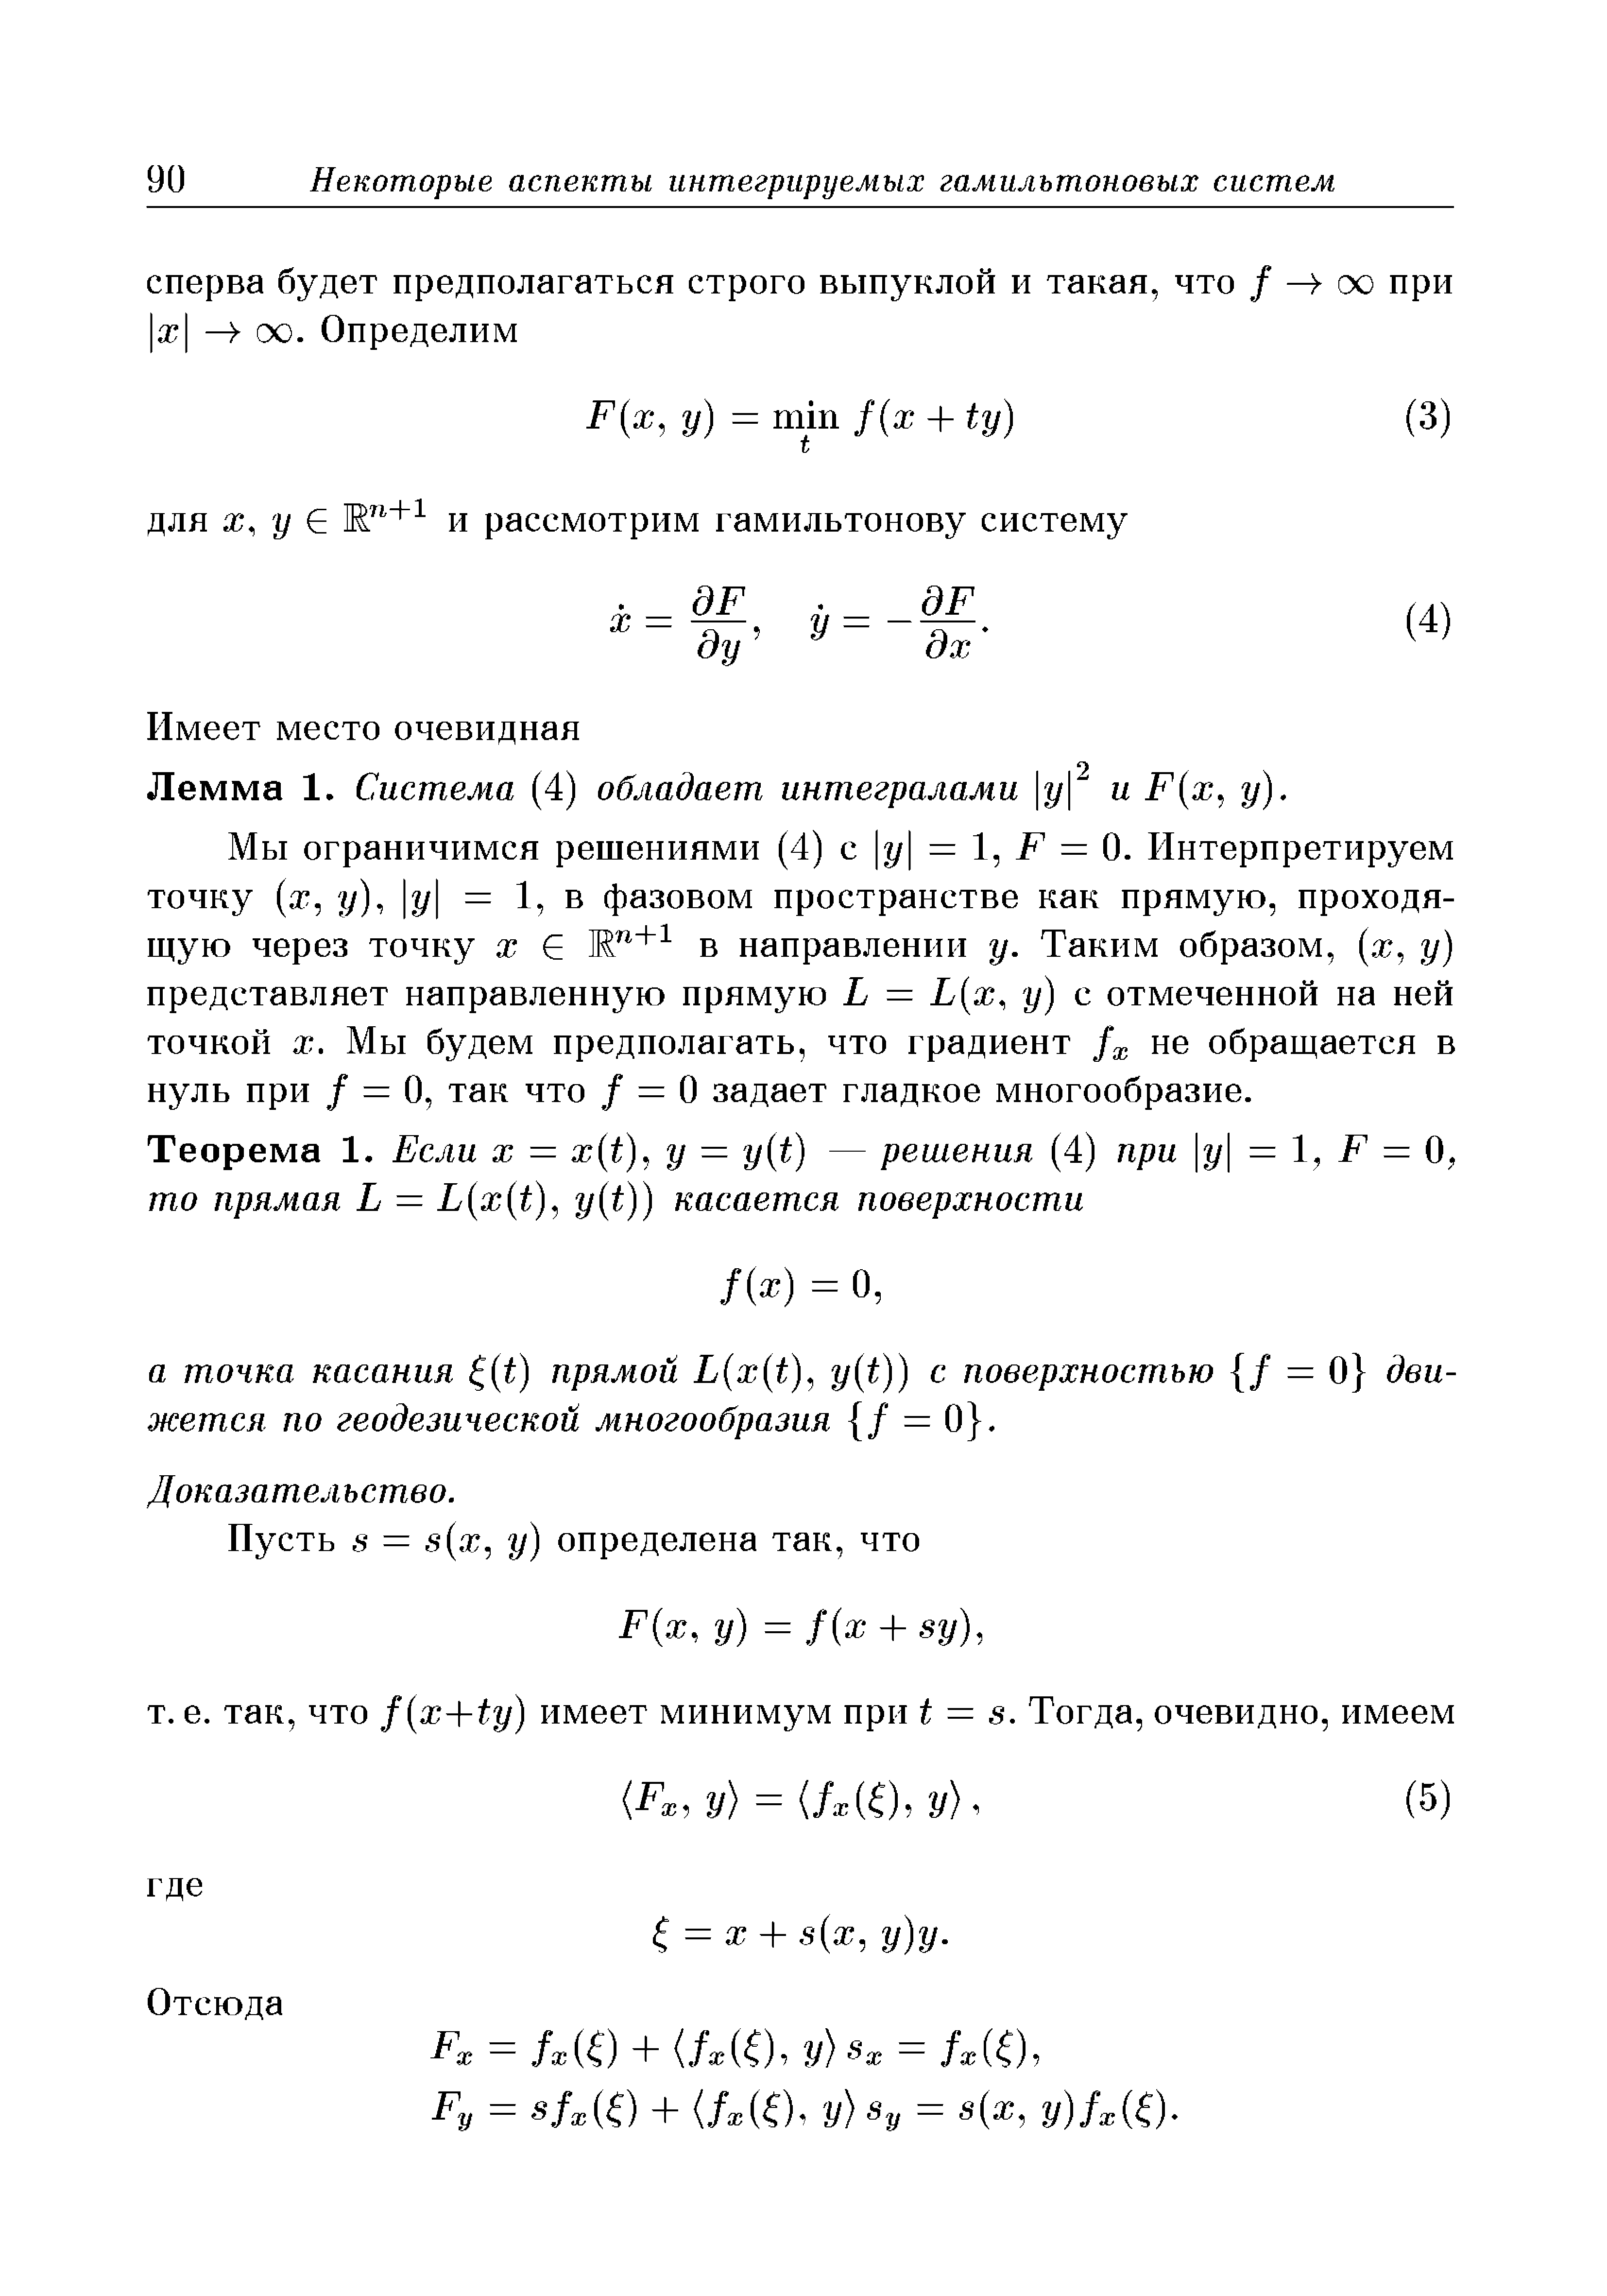 Лемма 1. Система (4) обладает интегралами у и F x у).